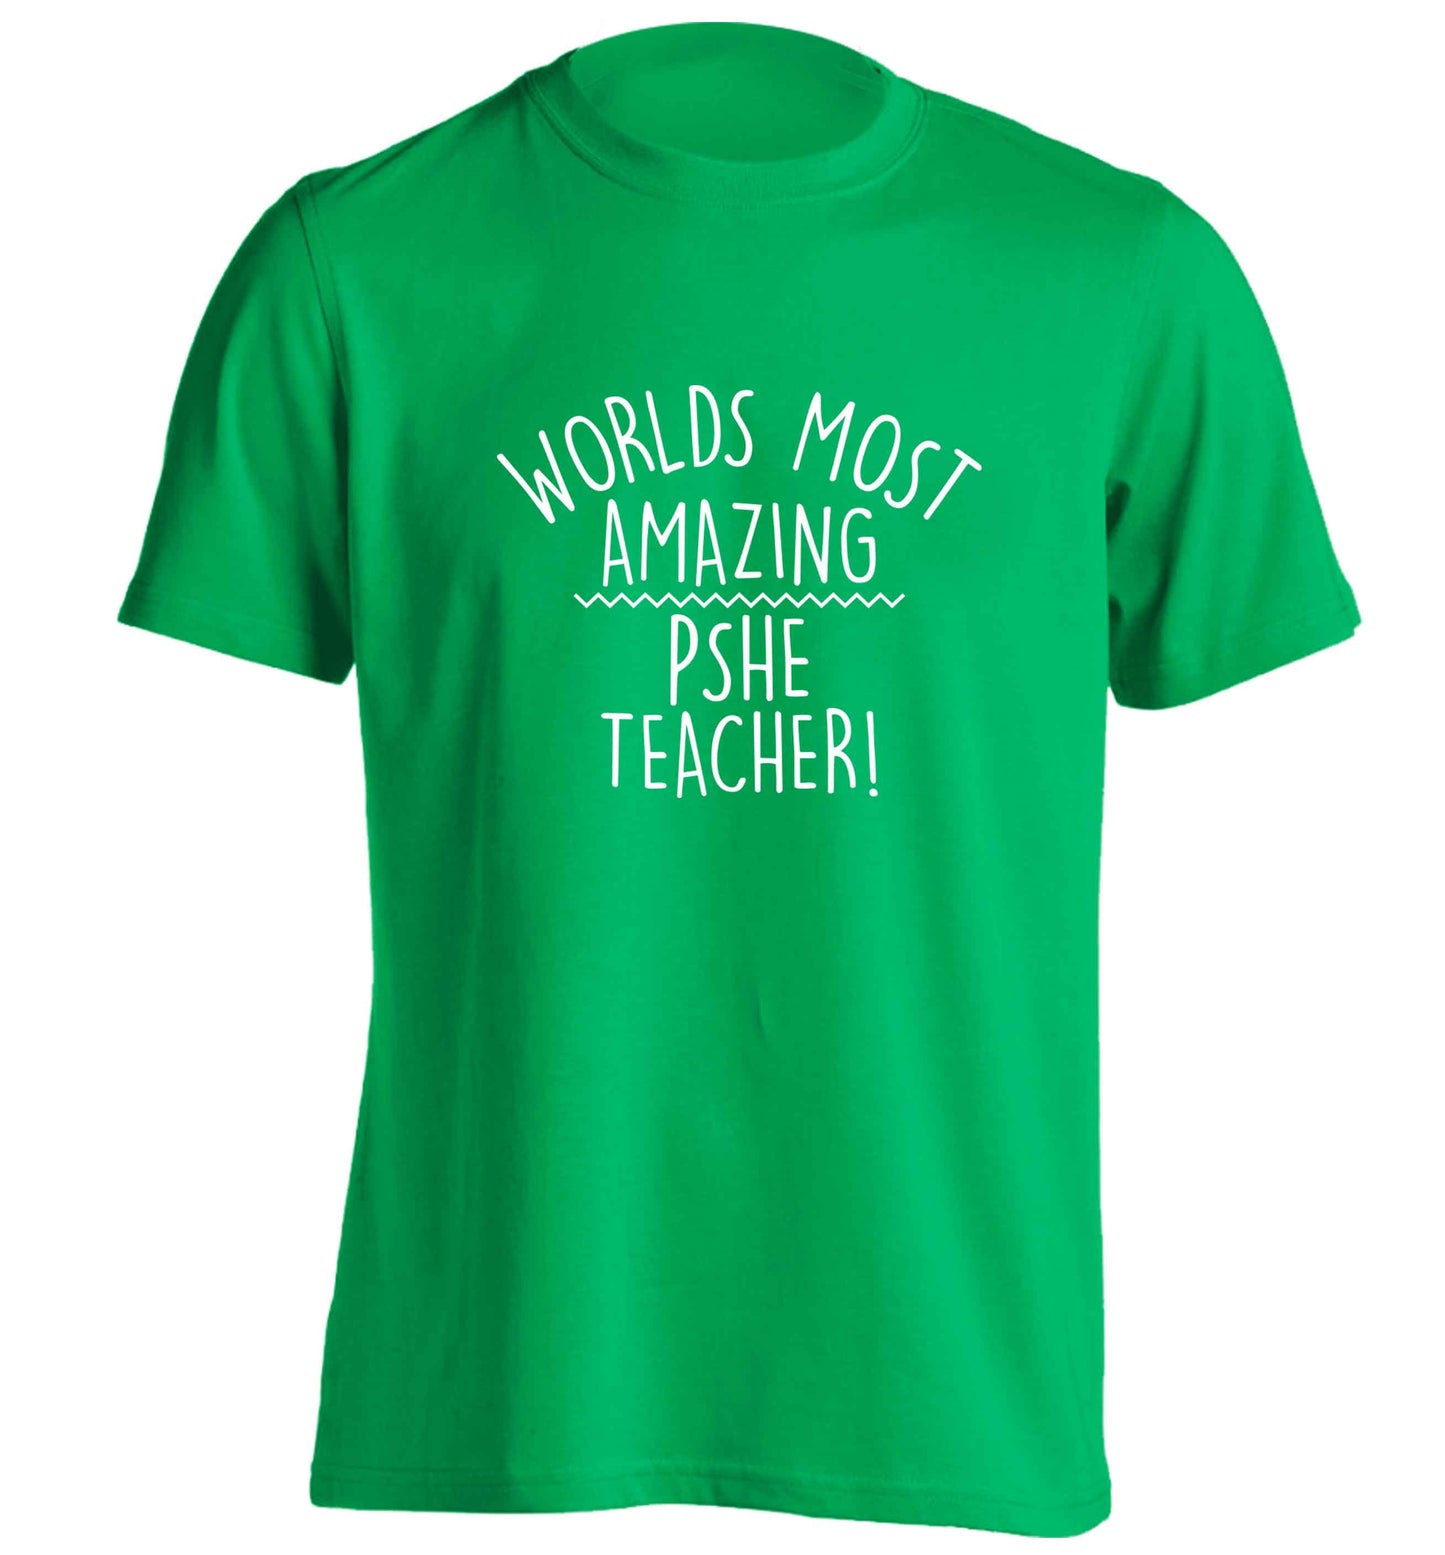 Worlds most amazing PHSE teacher adults unisex green Tshirt 2XL